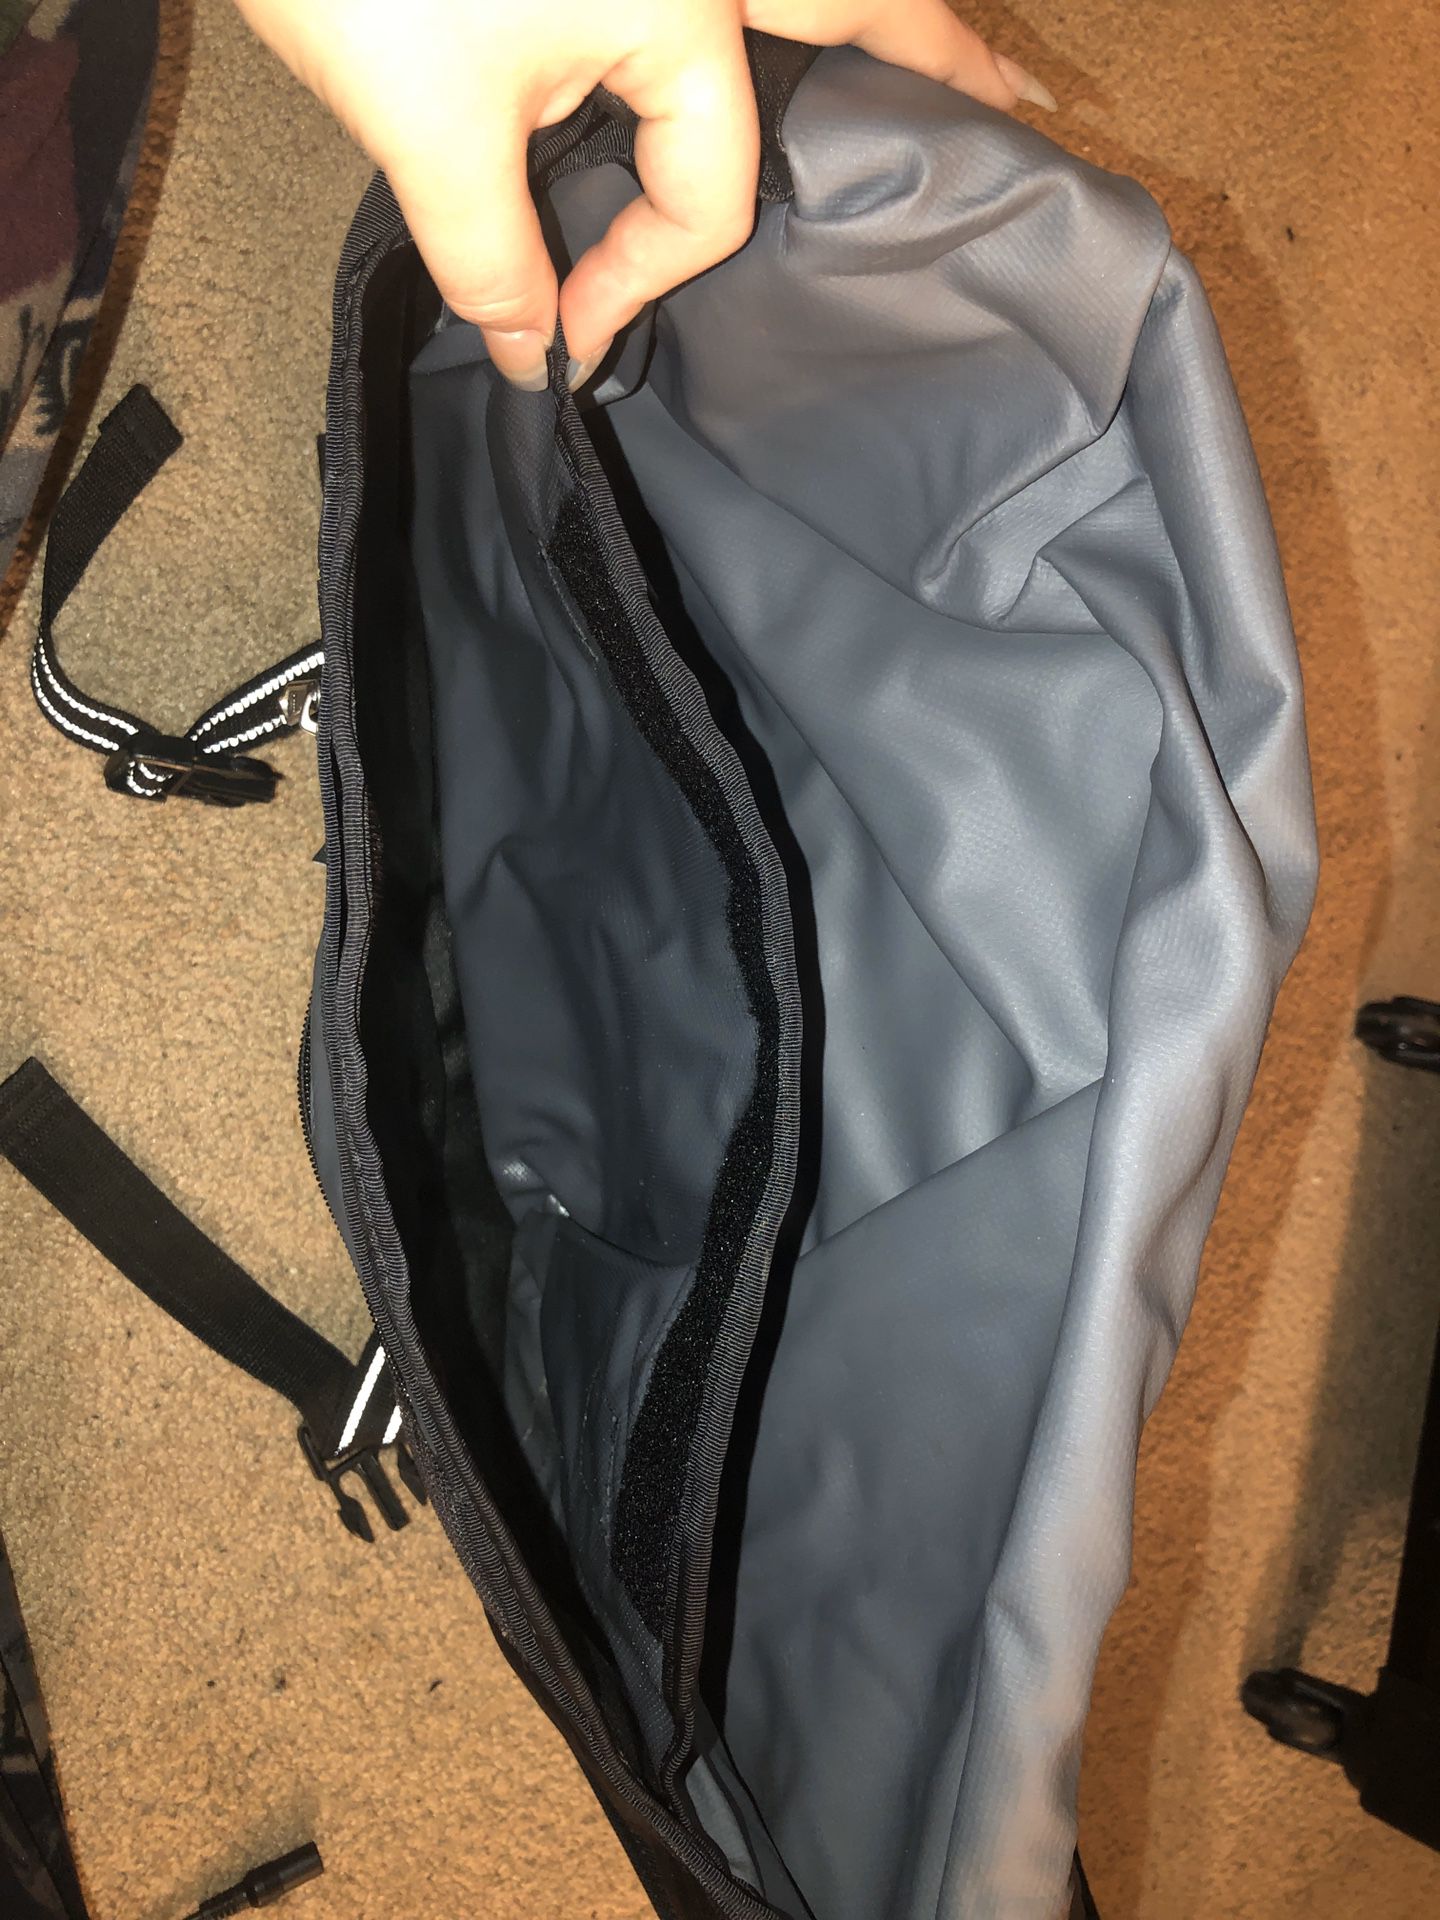 FURLA Open Tote Bag for Sale in Chicago, IL - OfferUp